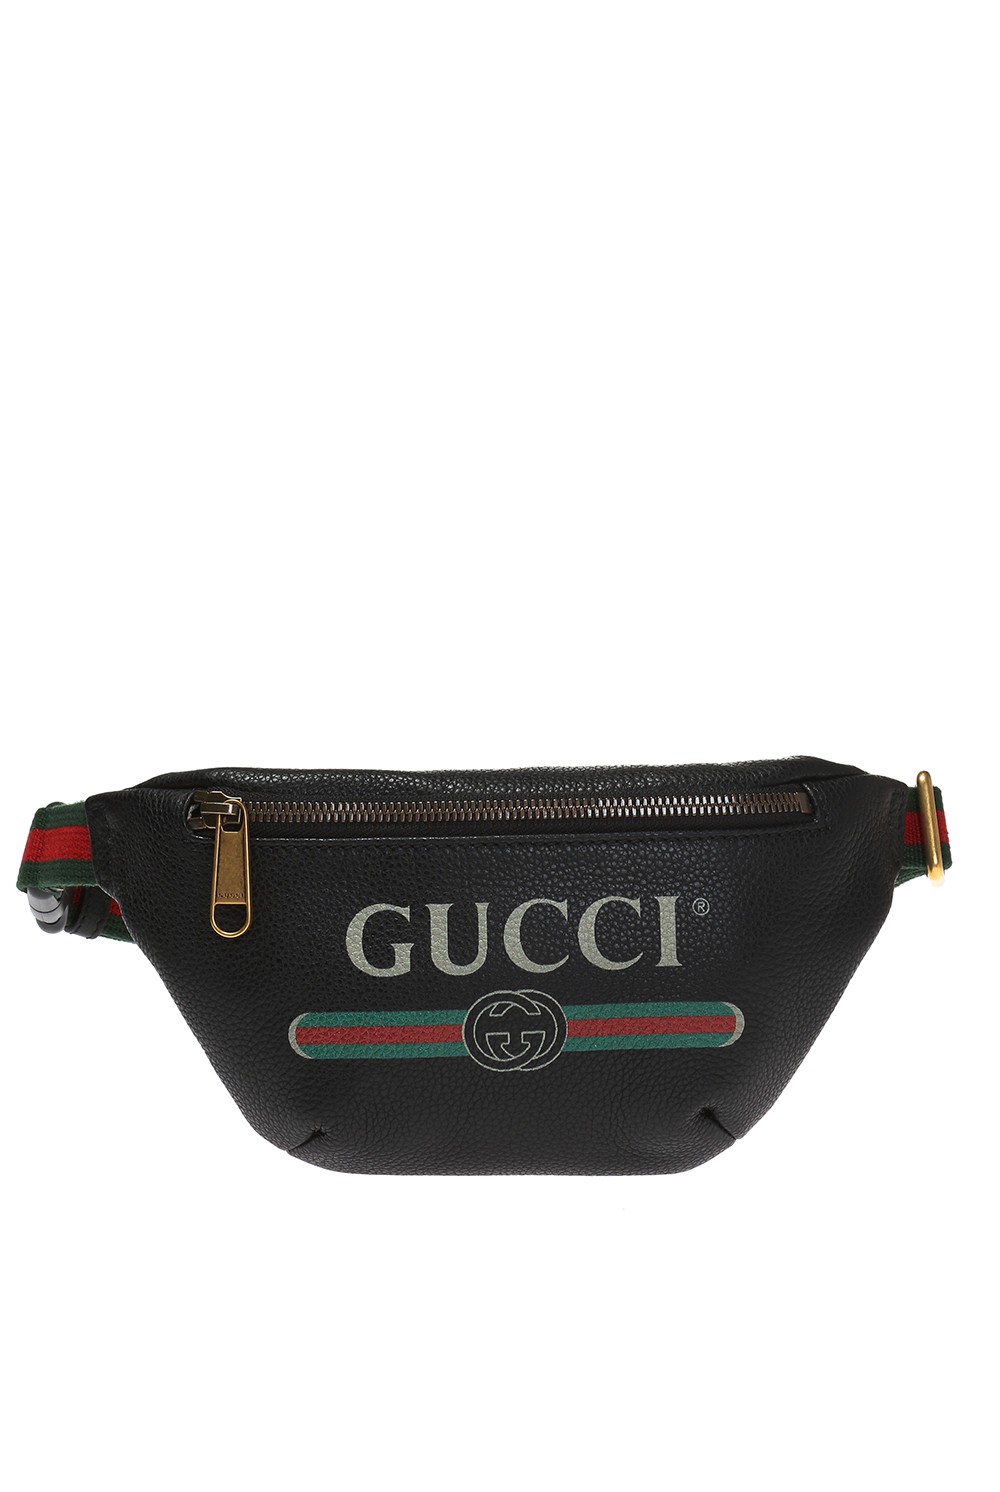 Gucci Web Belt Stripe Fanny Pack Black